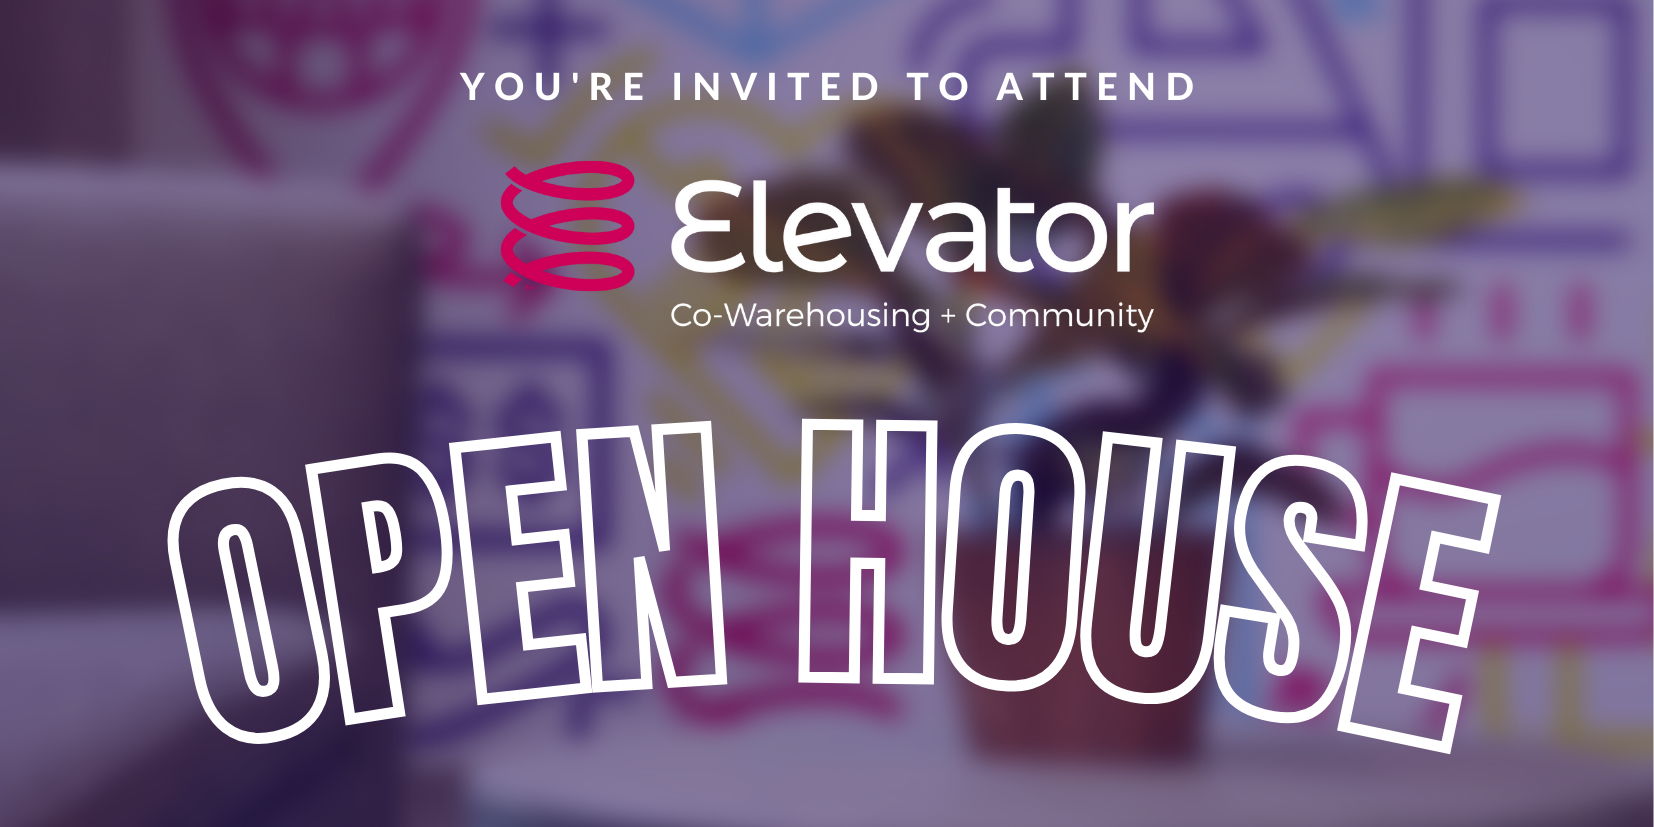 Elevator Open House promotional image